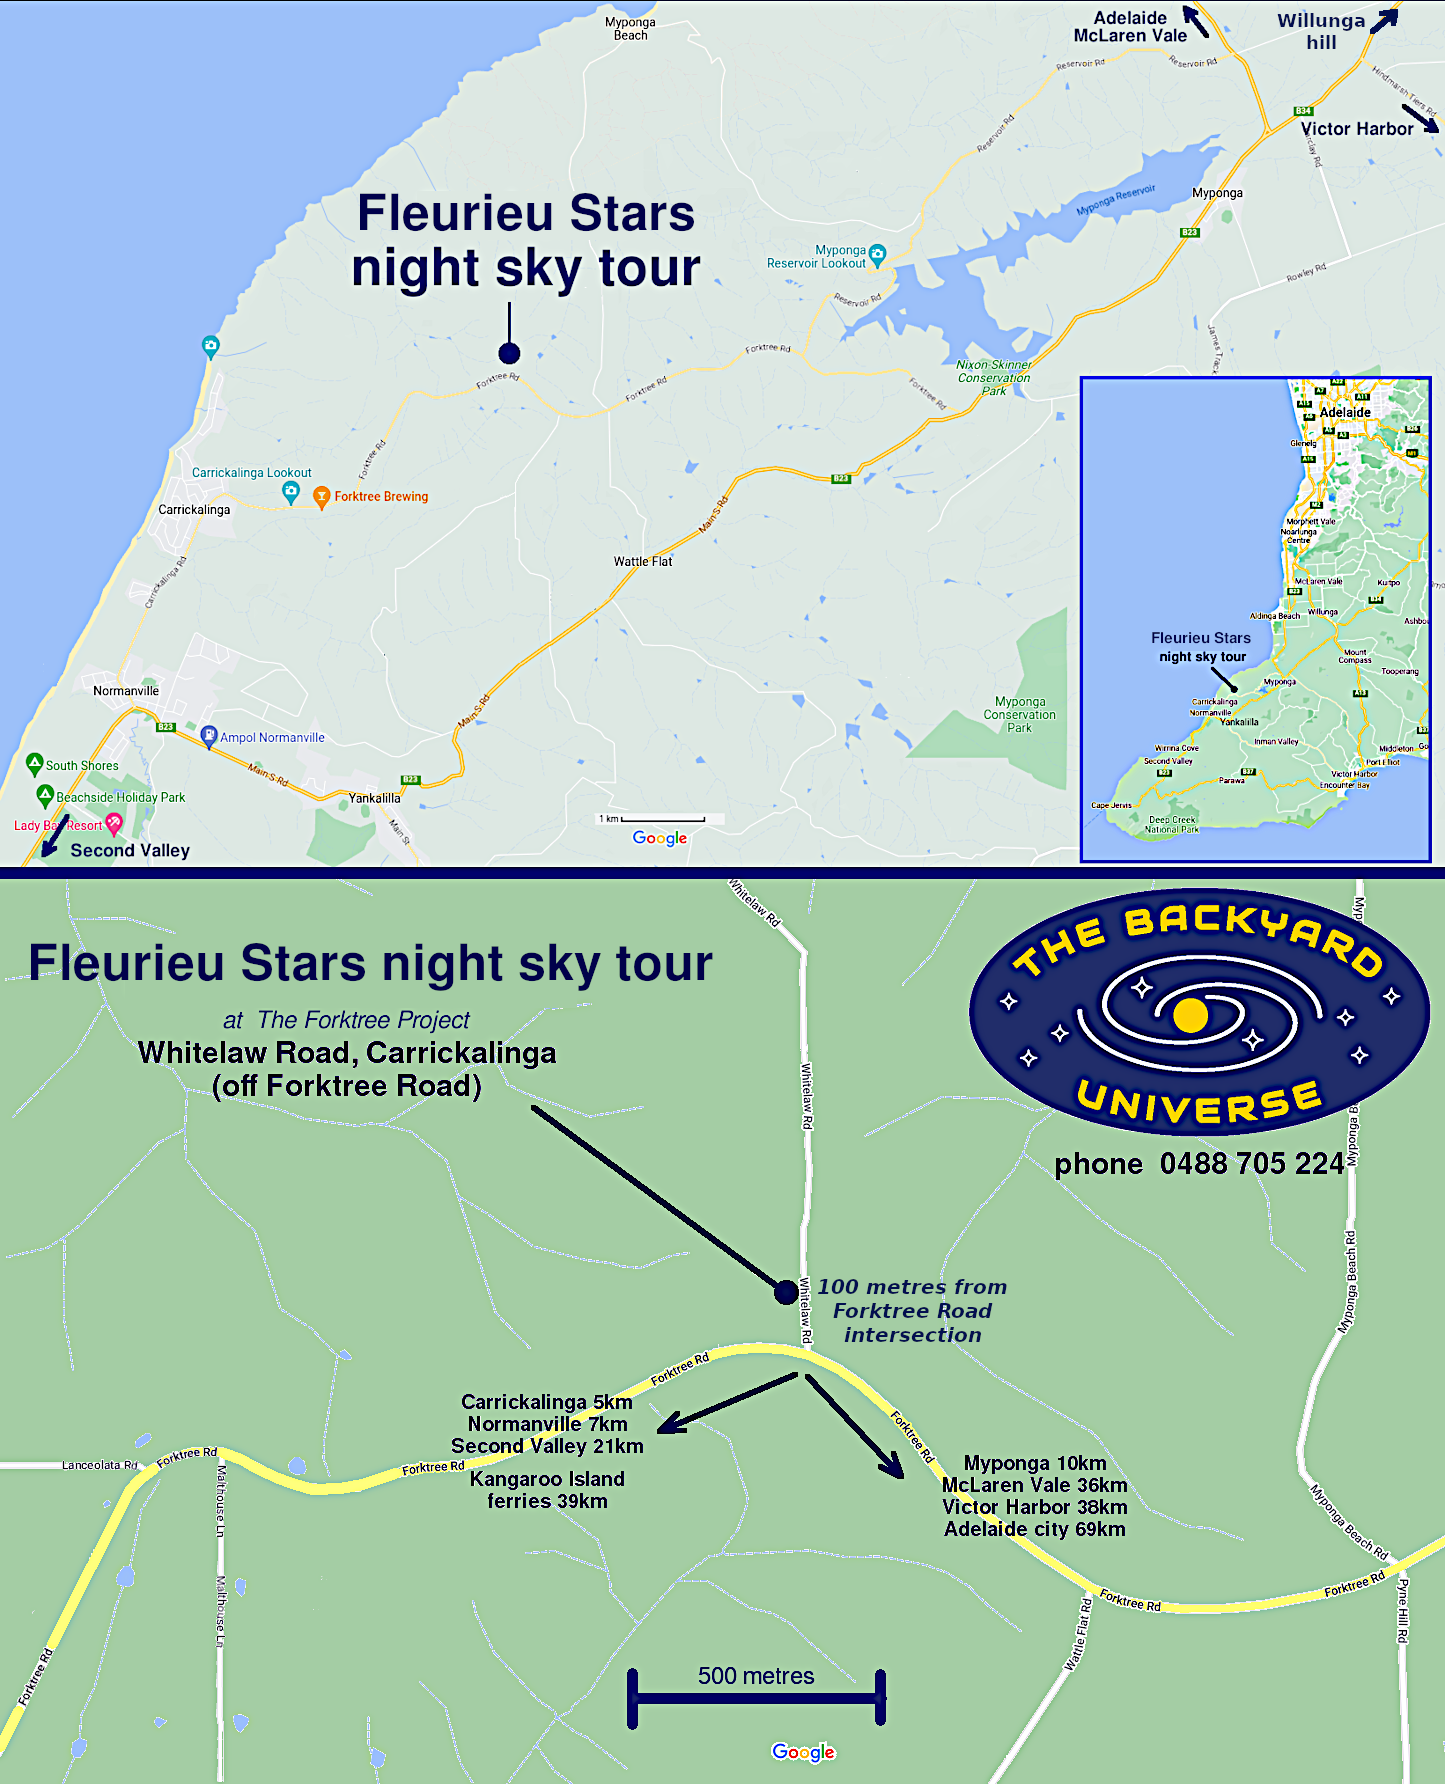 Fleurieu Stars : the multicultural night sky tour